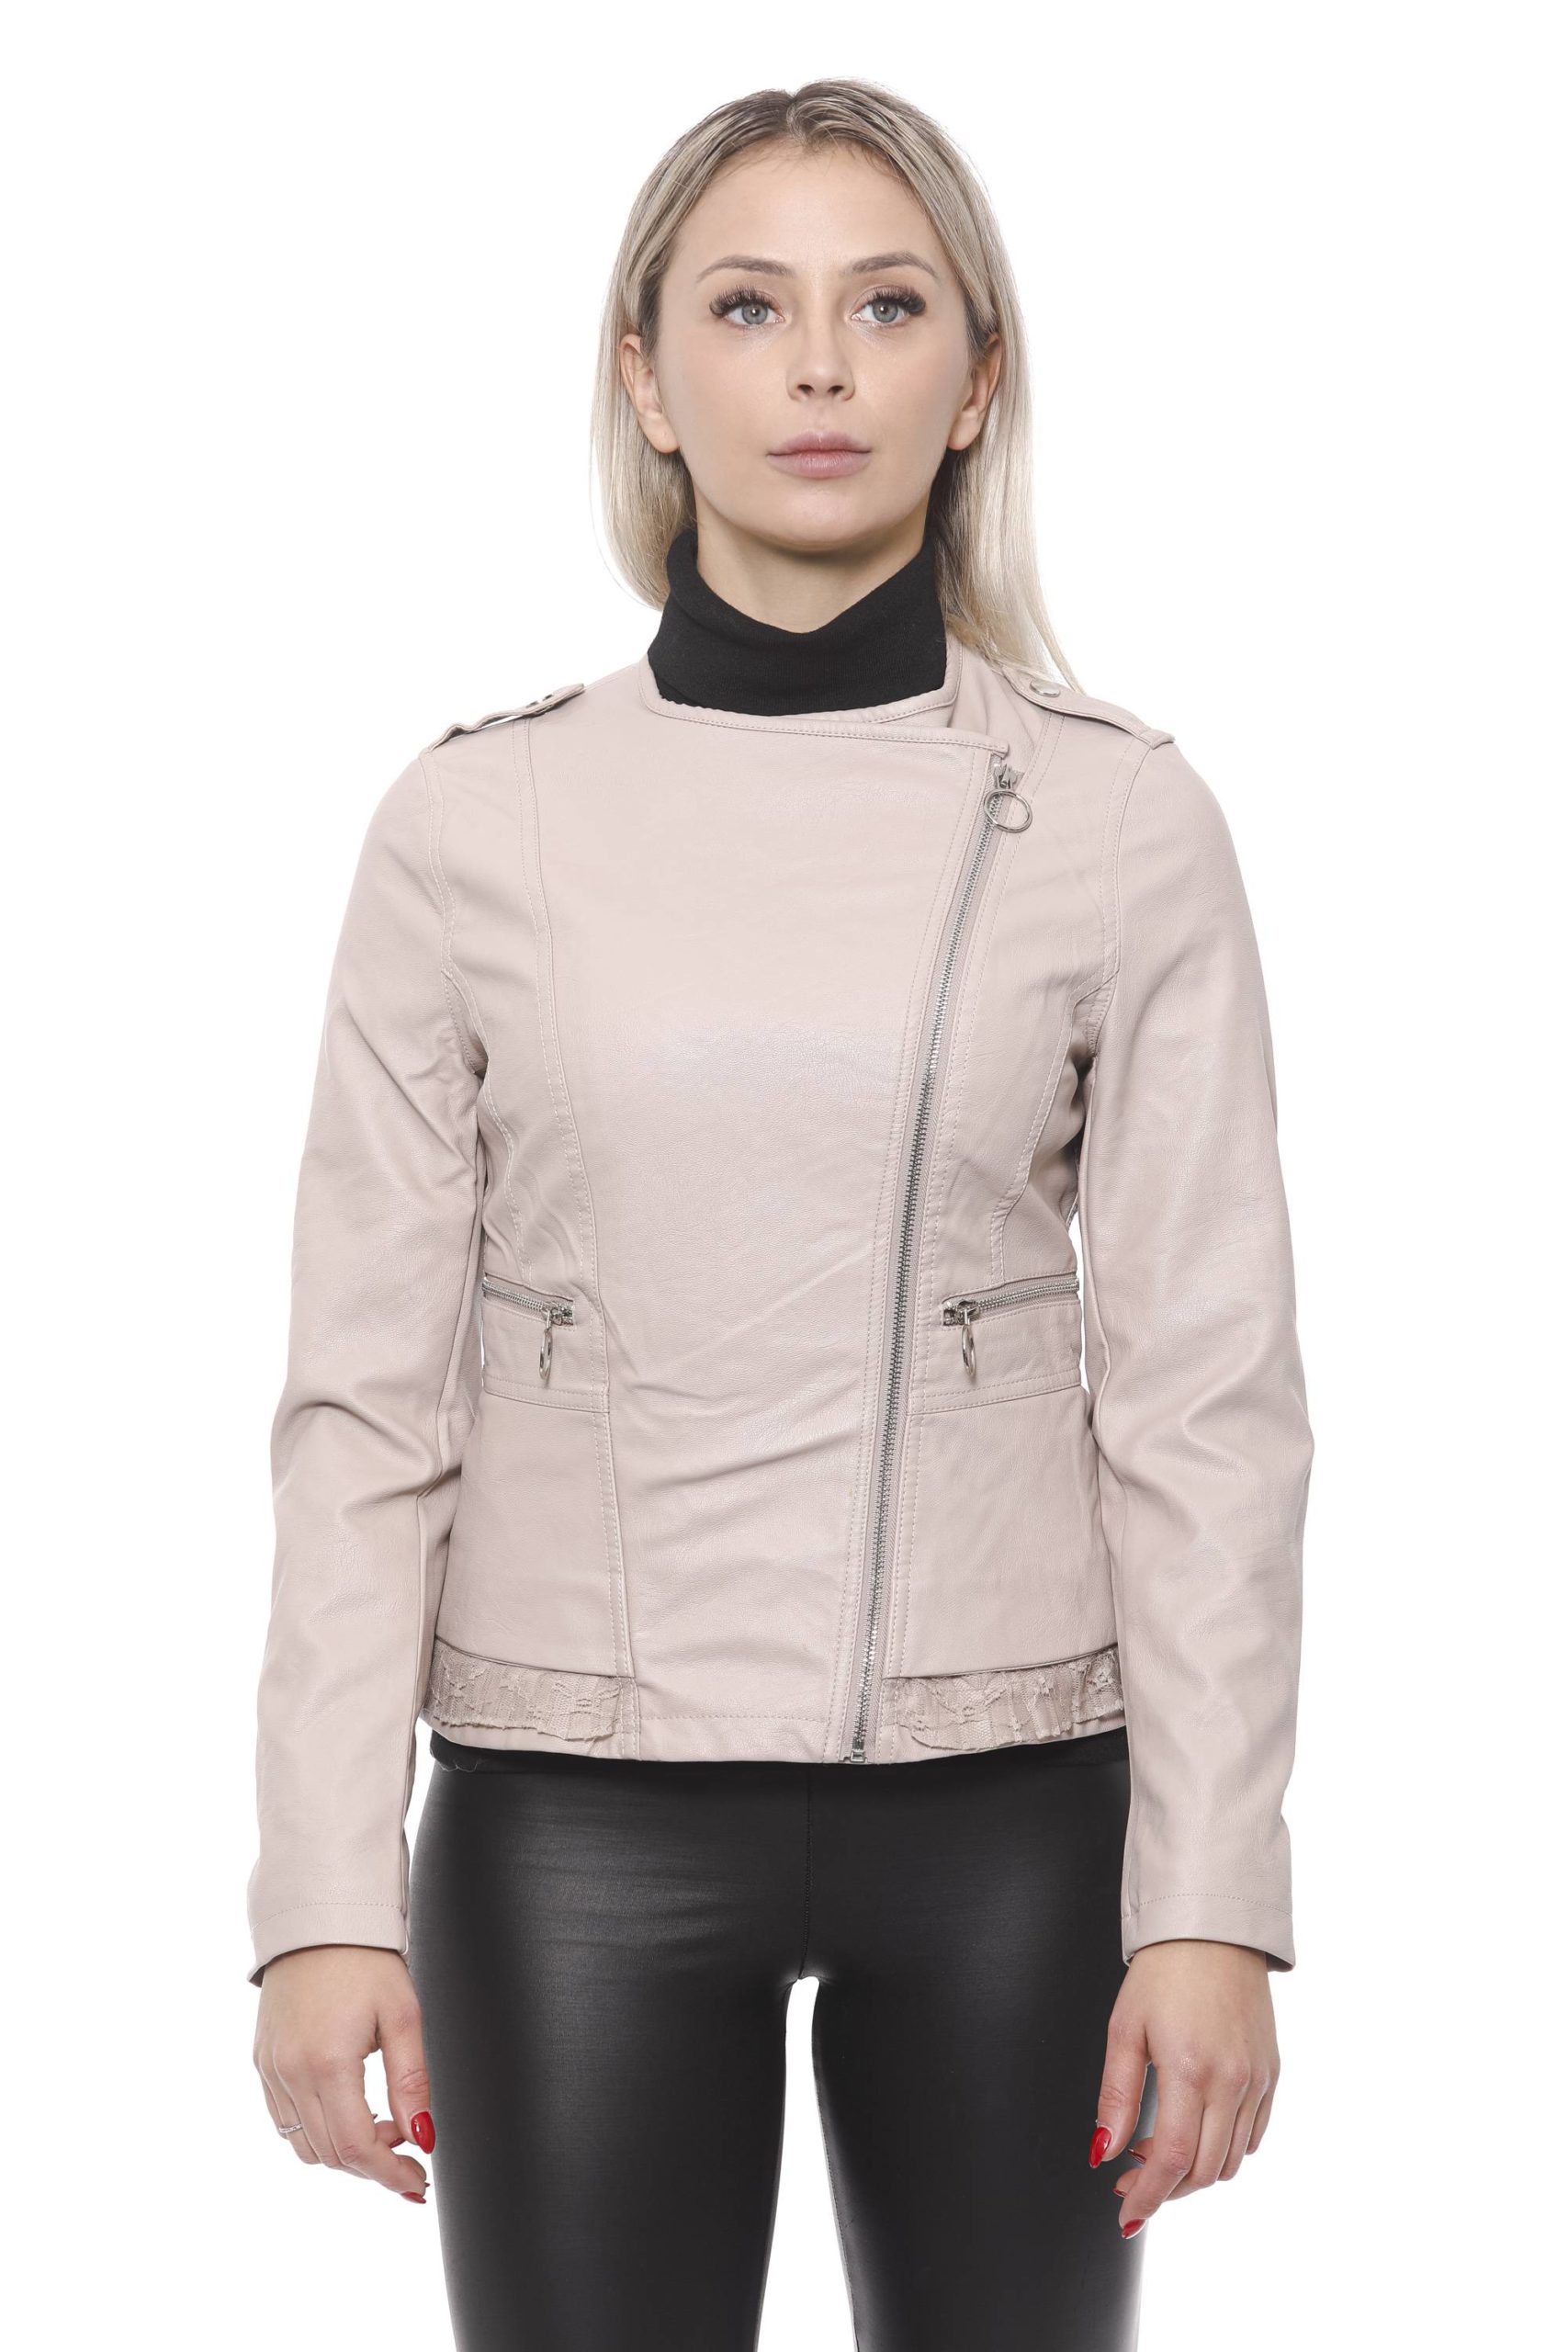 19V69 Italia Women's Rosa Jacket Pink 191388457 - M